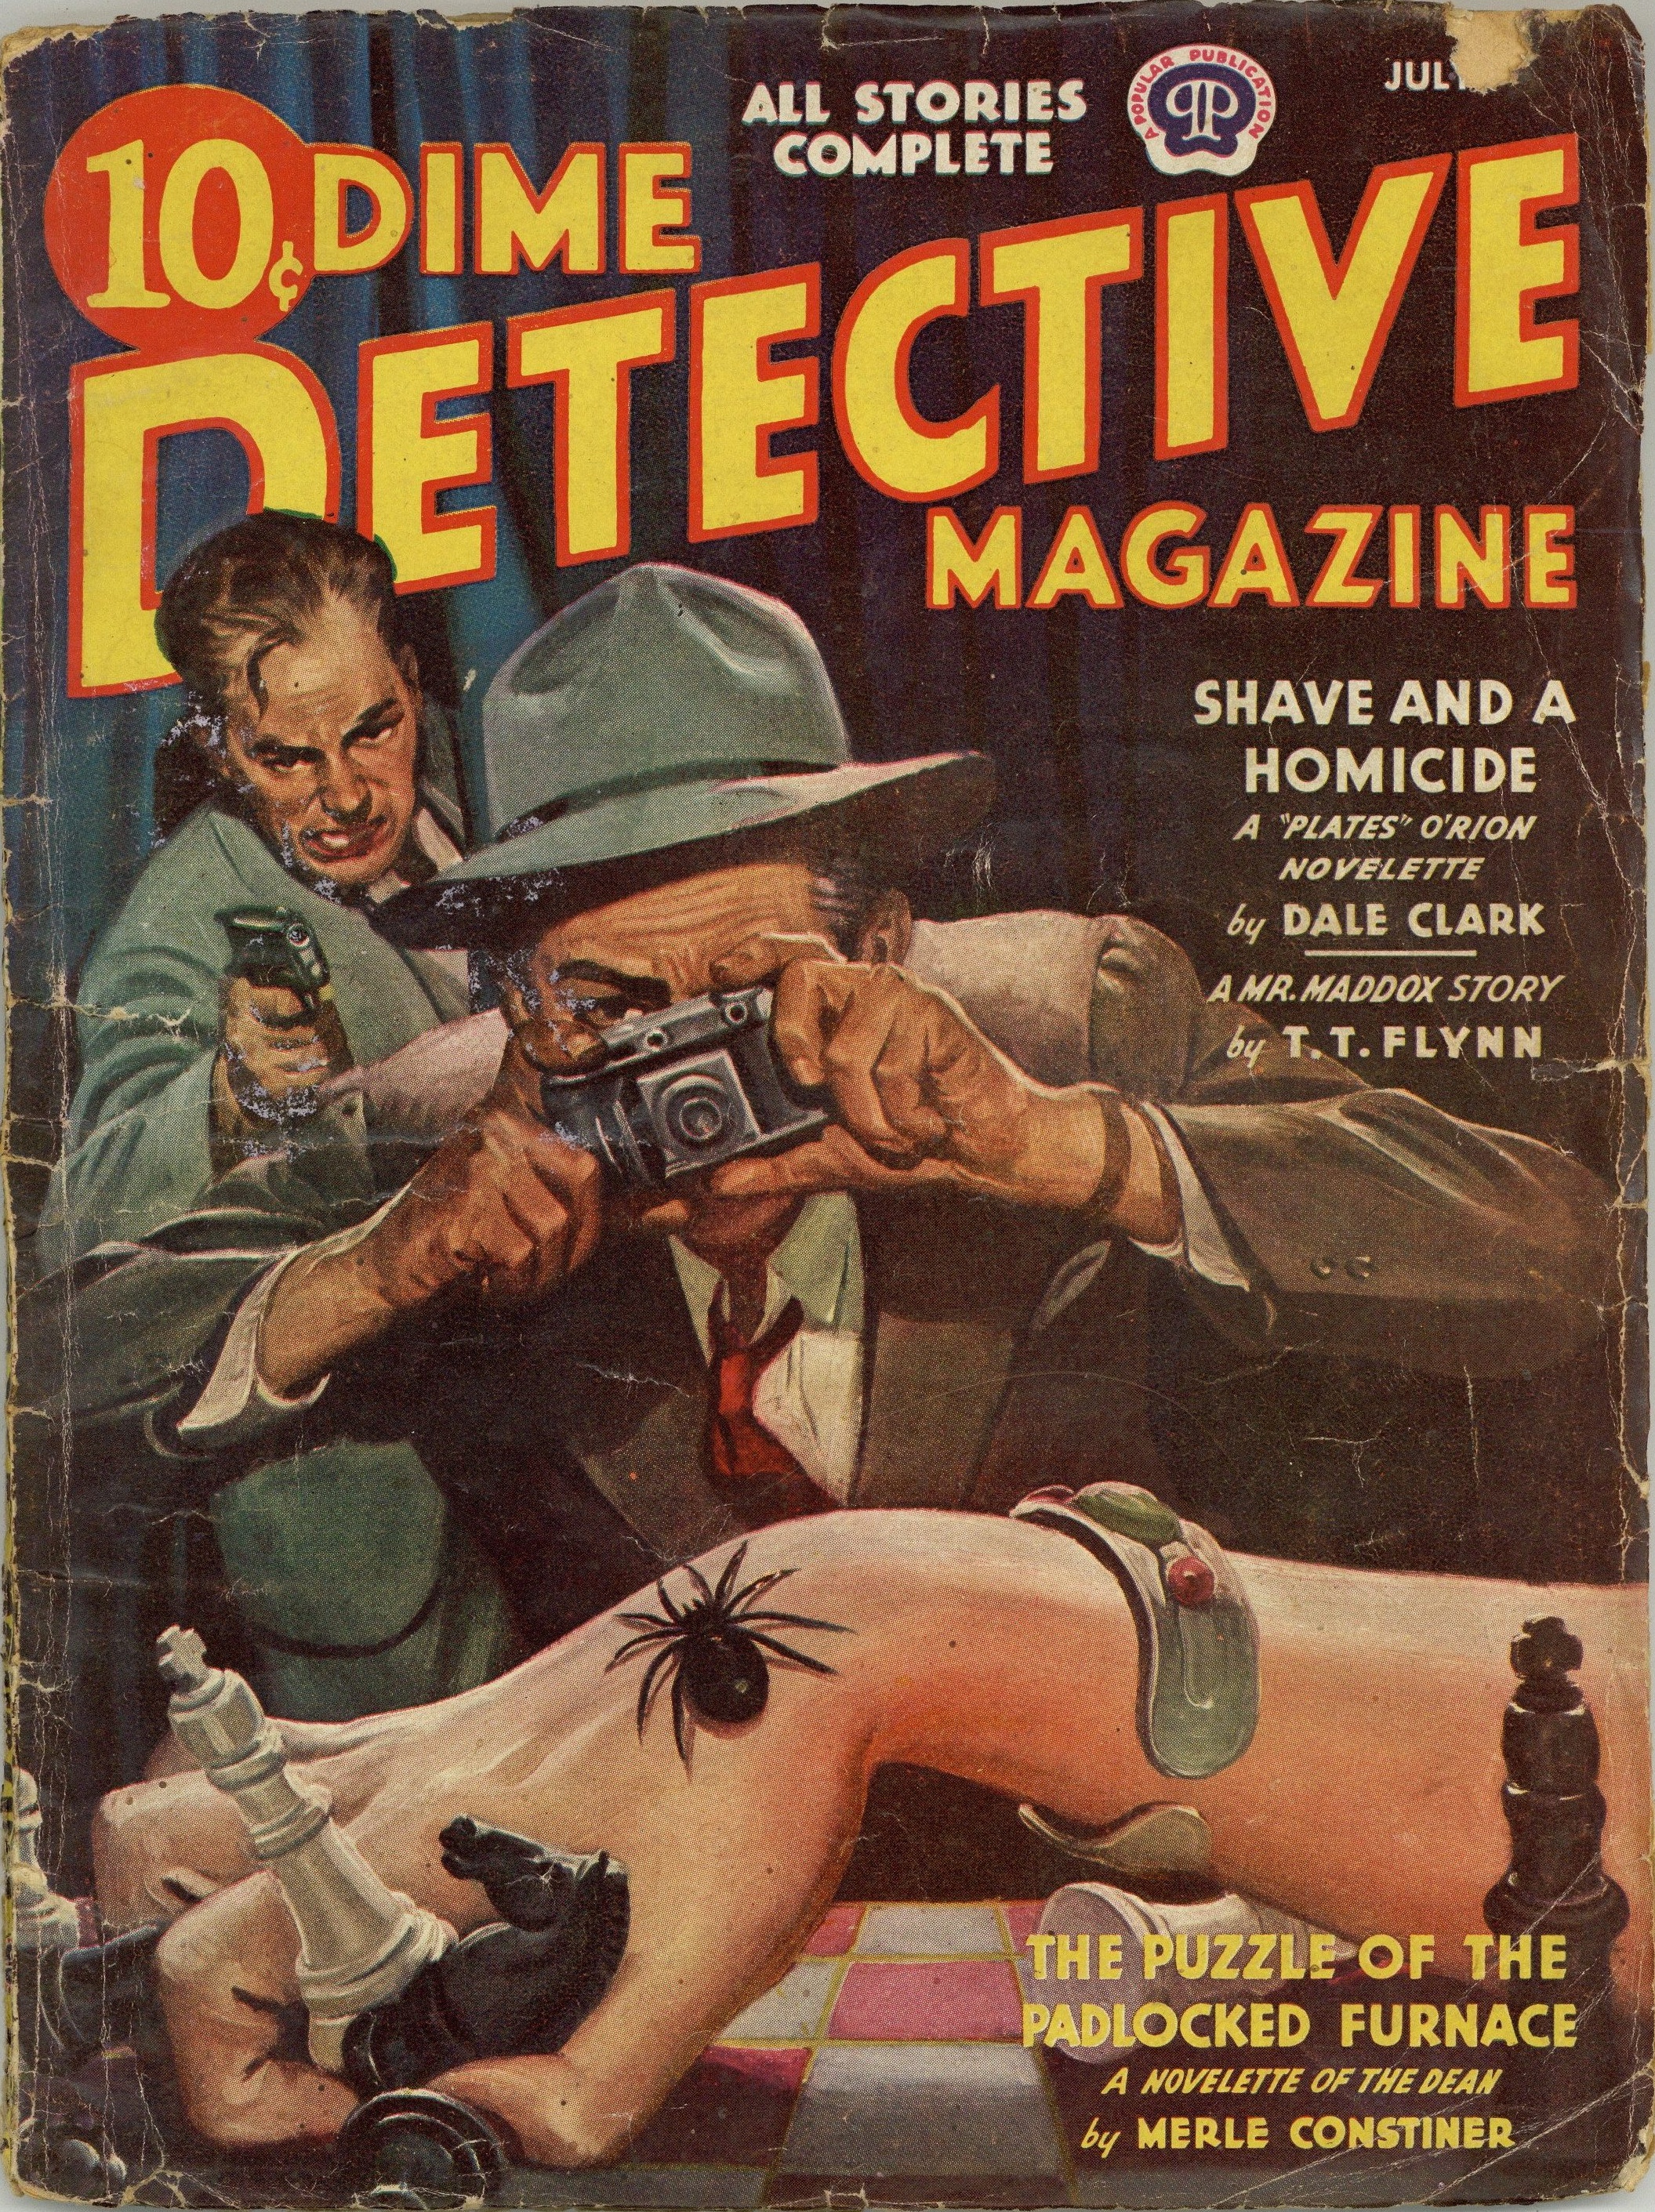 vintage detective magazine covers